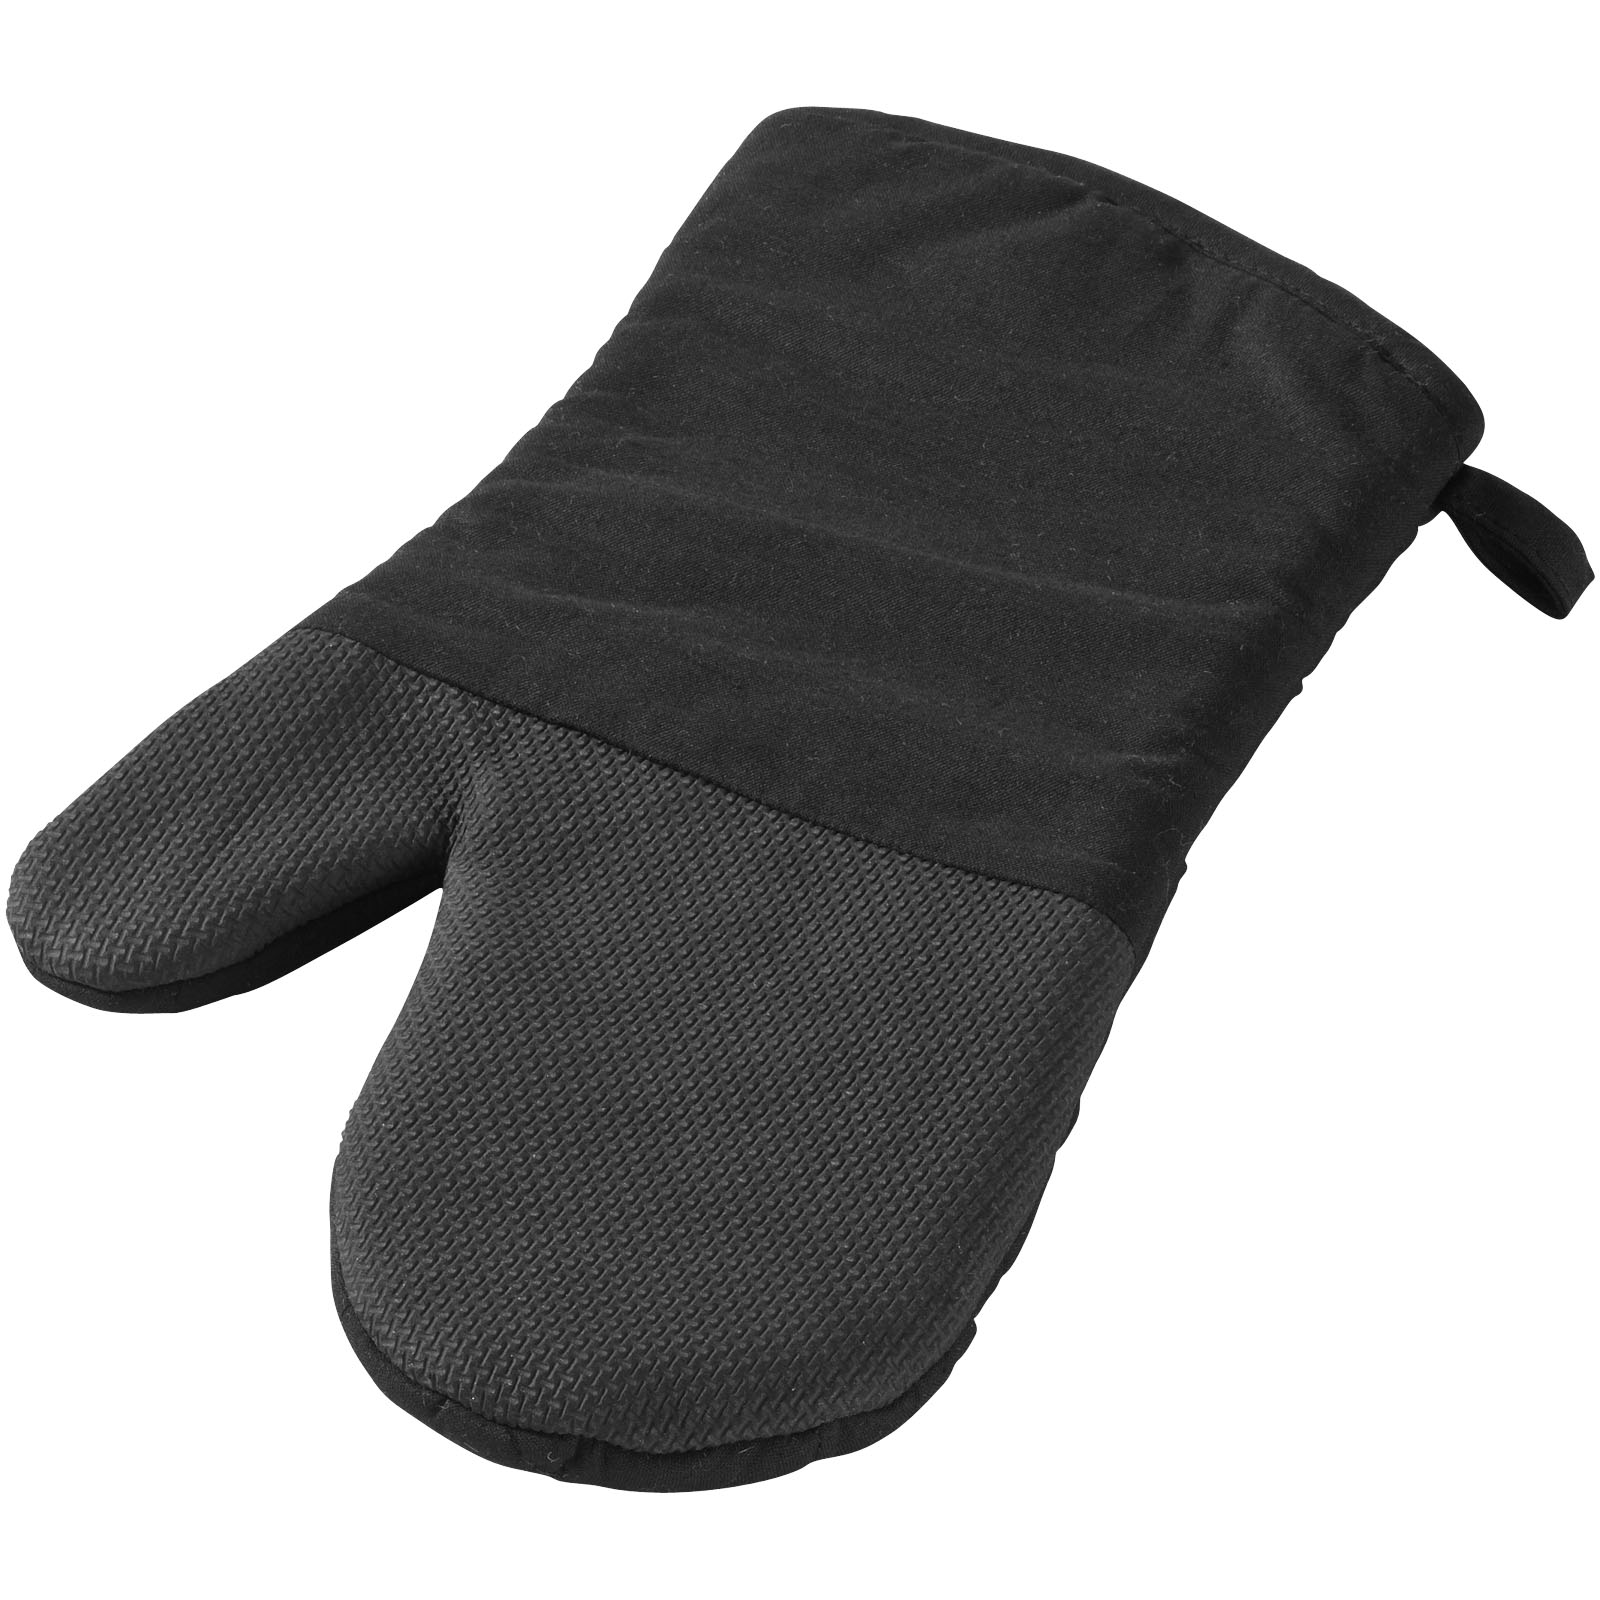 Kitchen Linen - Maya oven gloves with silicone grip